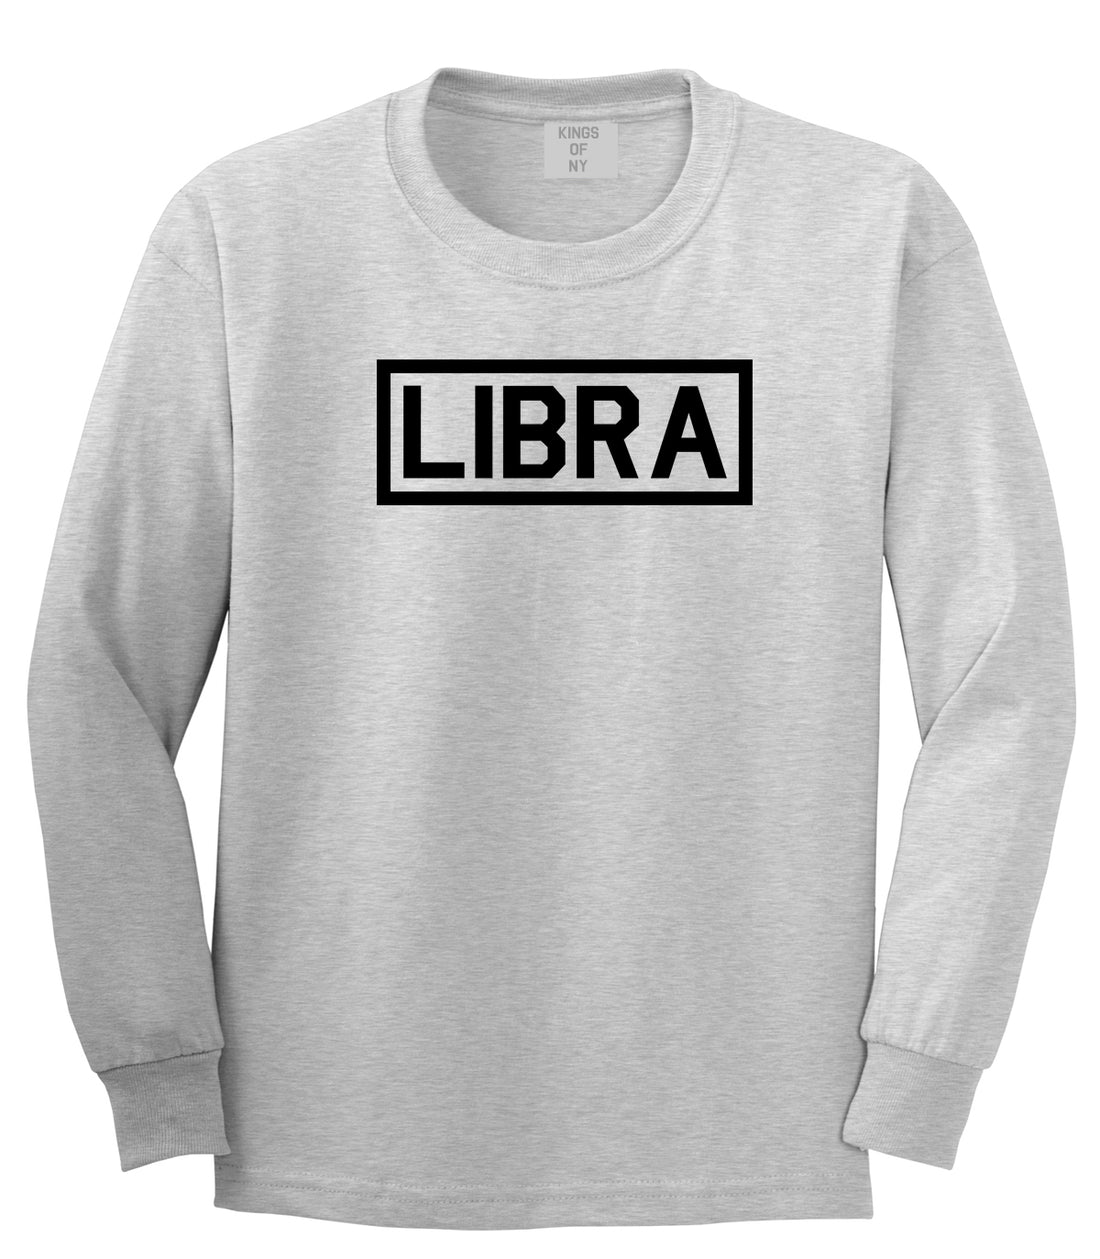 Libra Horoscope Sign Mens Grey Long Sleeve T-Shirt by KINGS OF NY